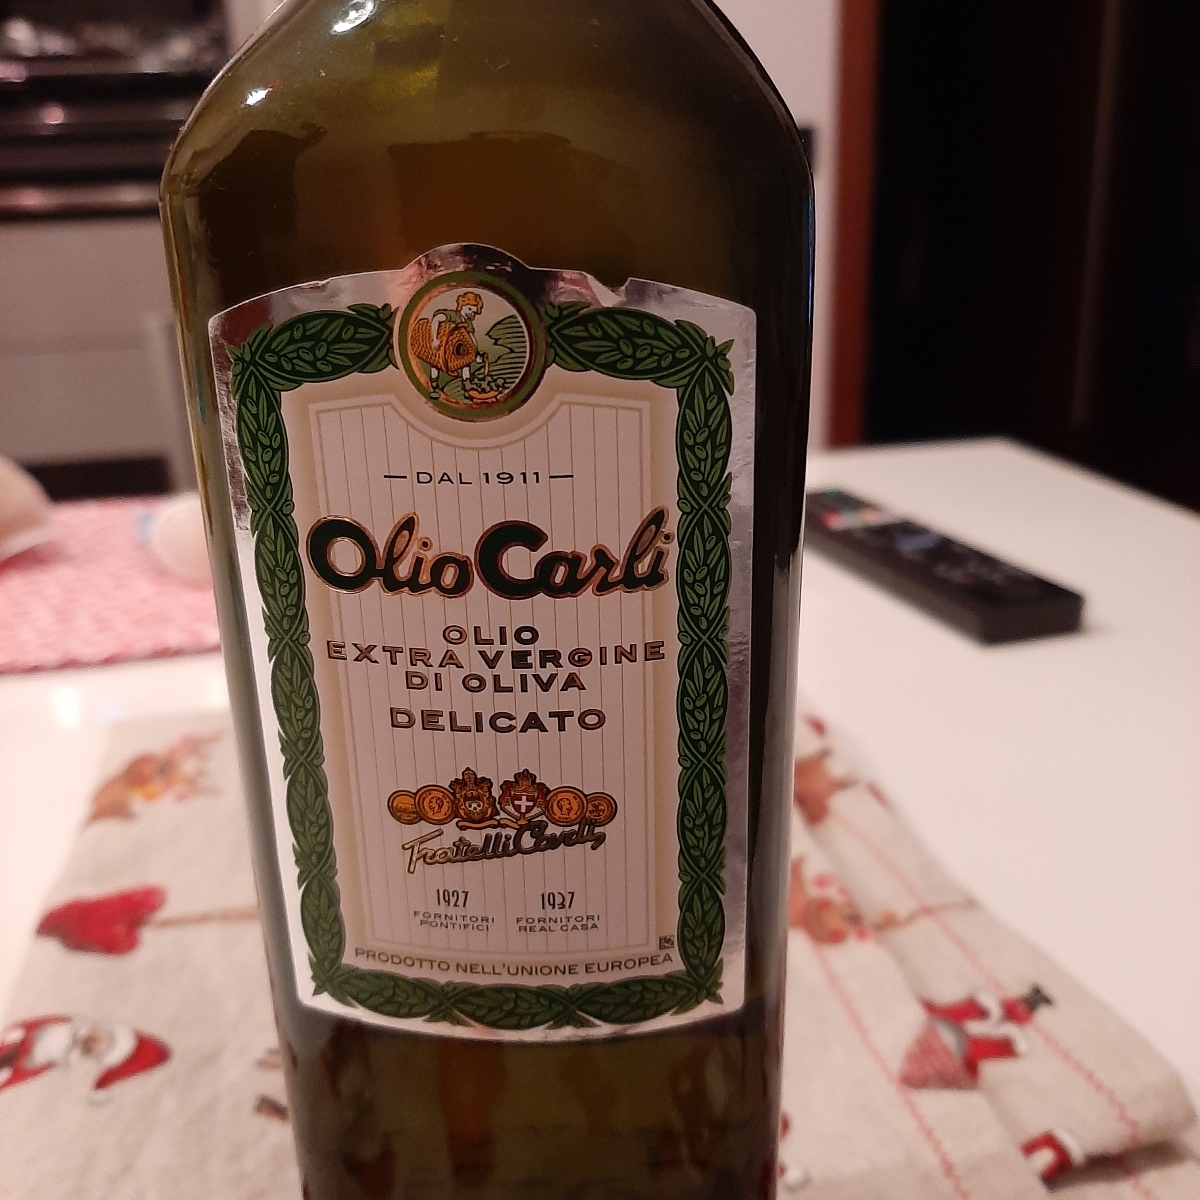 Carli Olio extra vergine oliva delicato Reviews | abillion